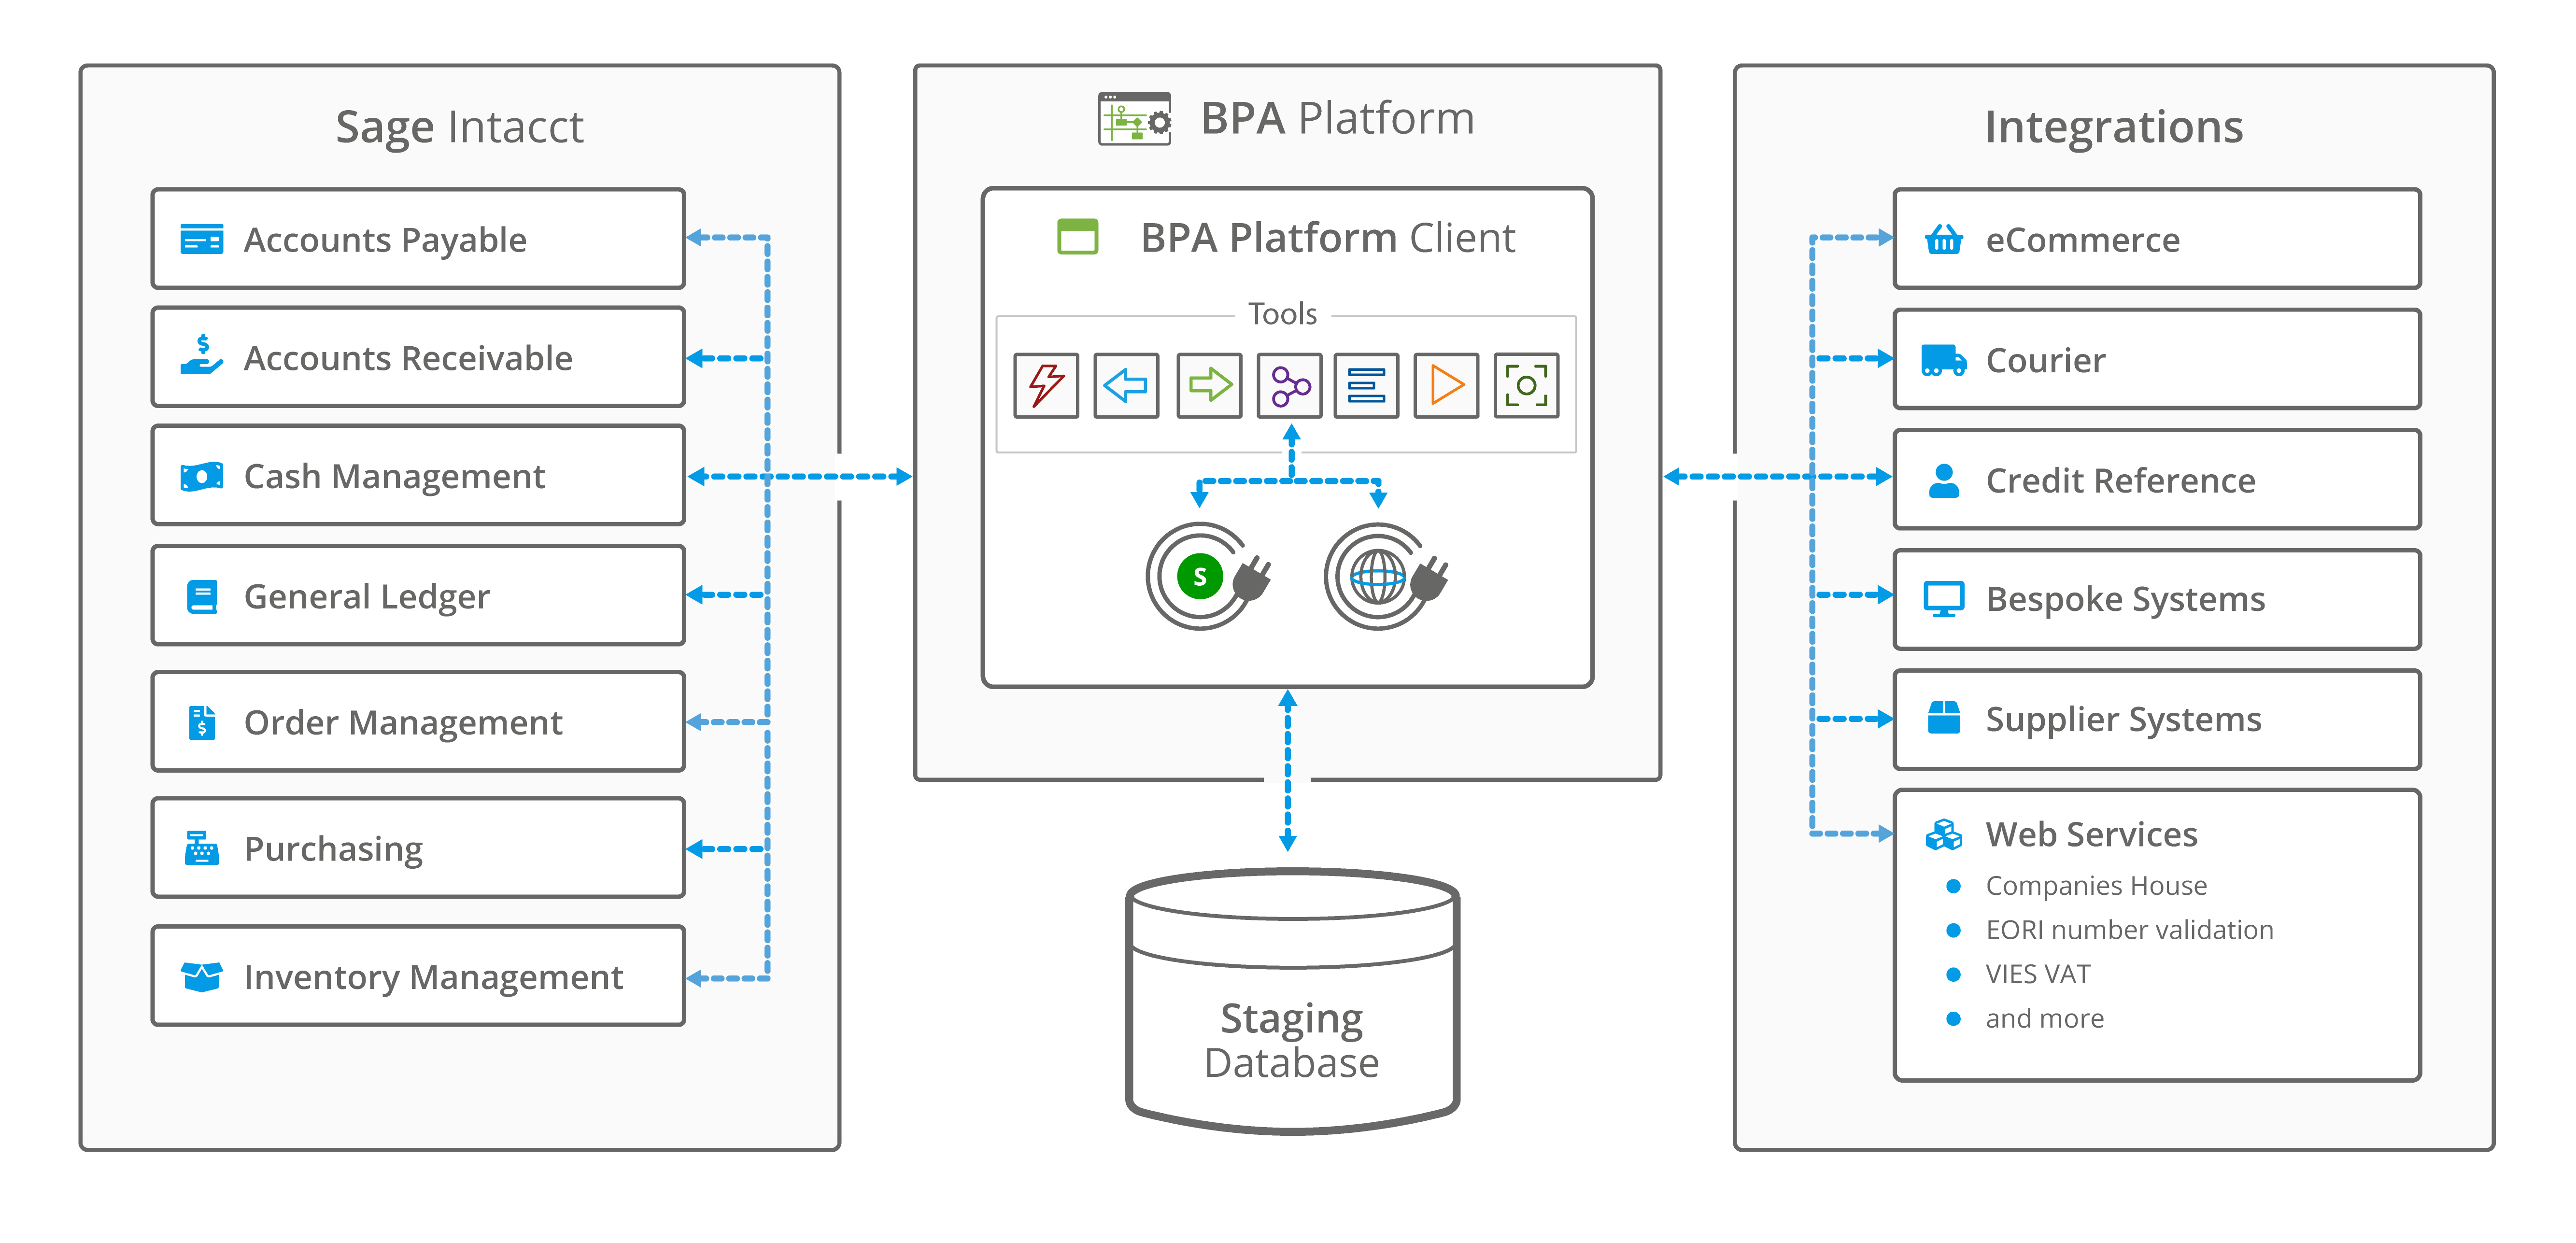 Sage Intacct Connector - Integration architecture scenarios with BPA Platform